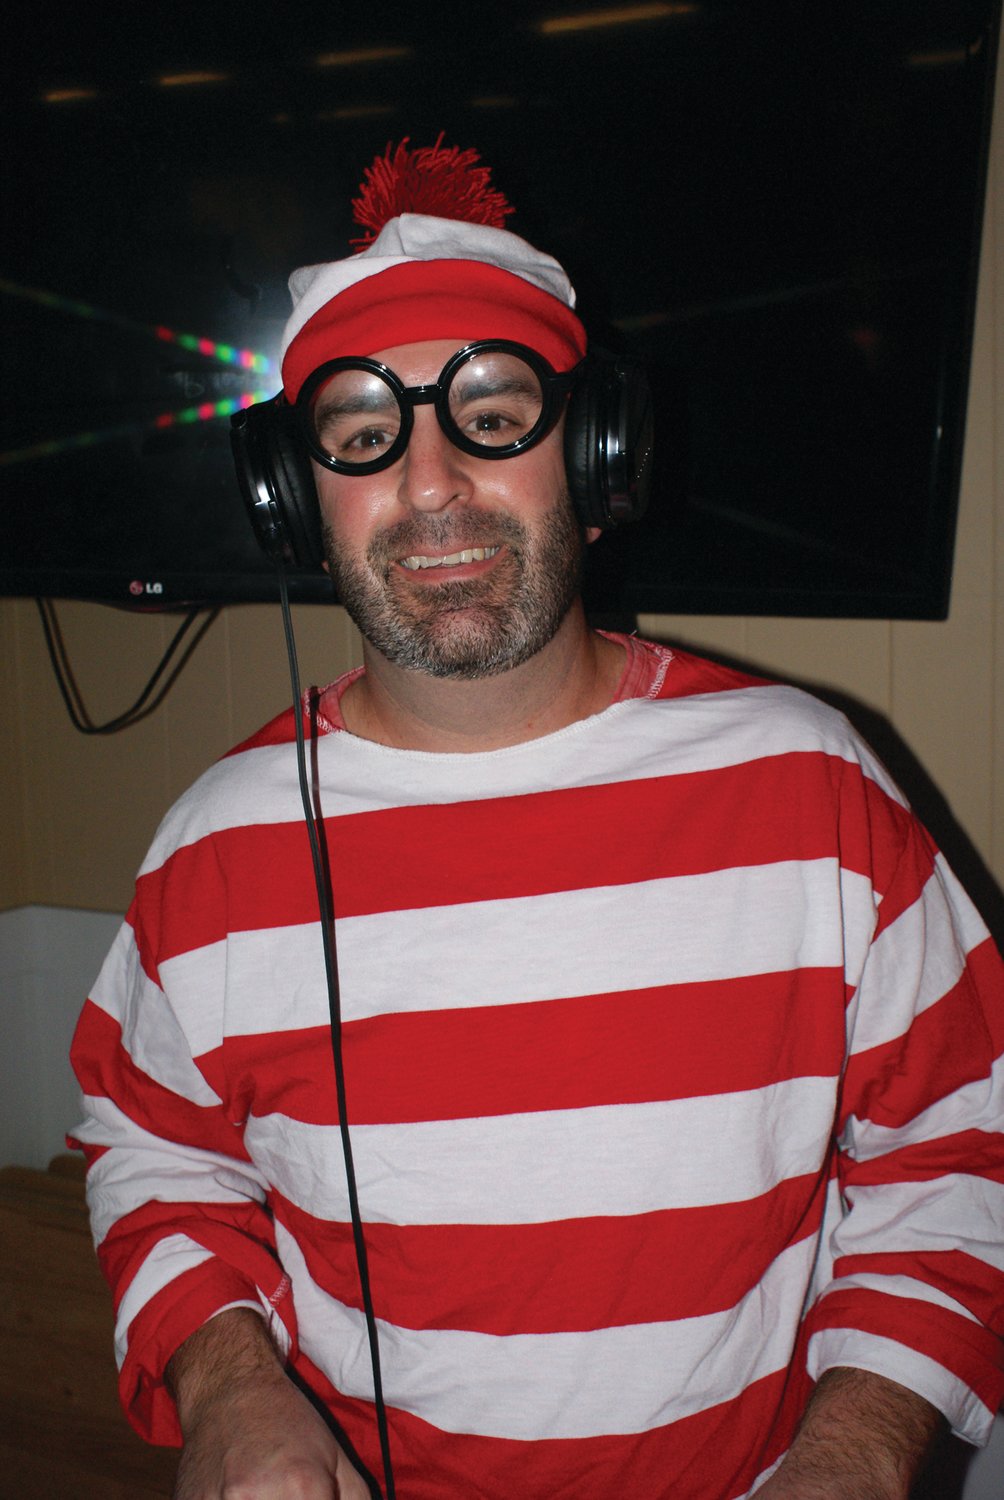 FOUND WALDO: Dressed up as Waldo was DJ Johnny Nova (John DeGenova), who provided entertainment during the party.